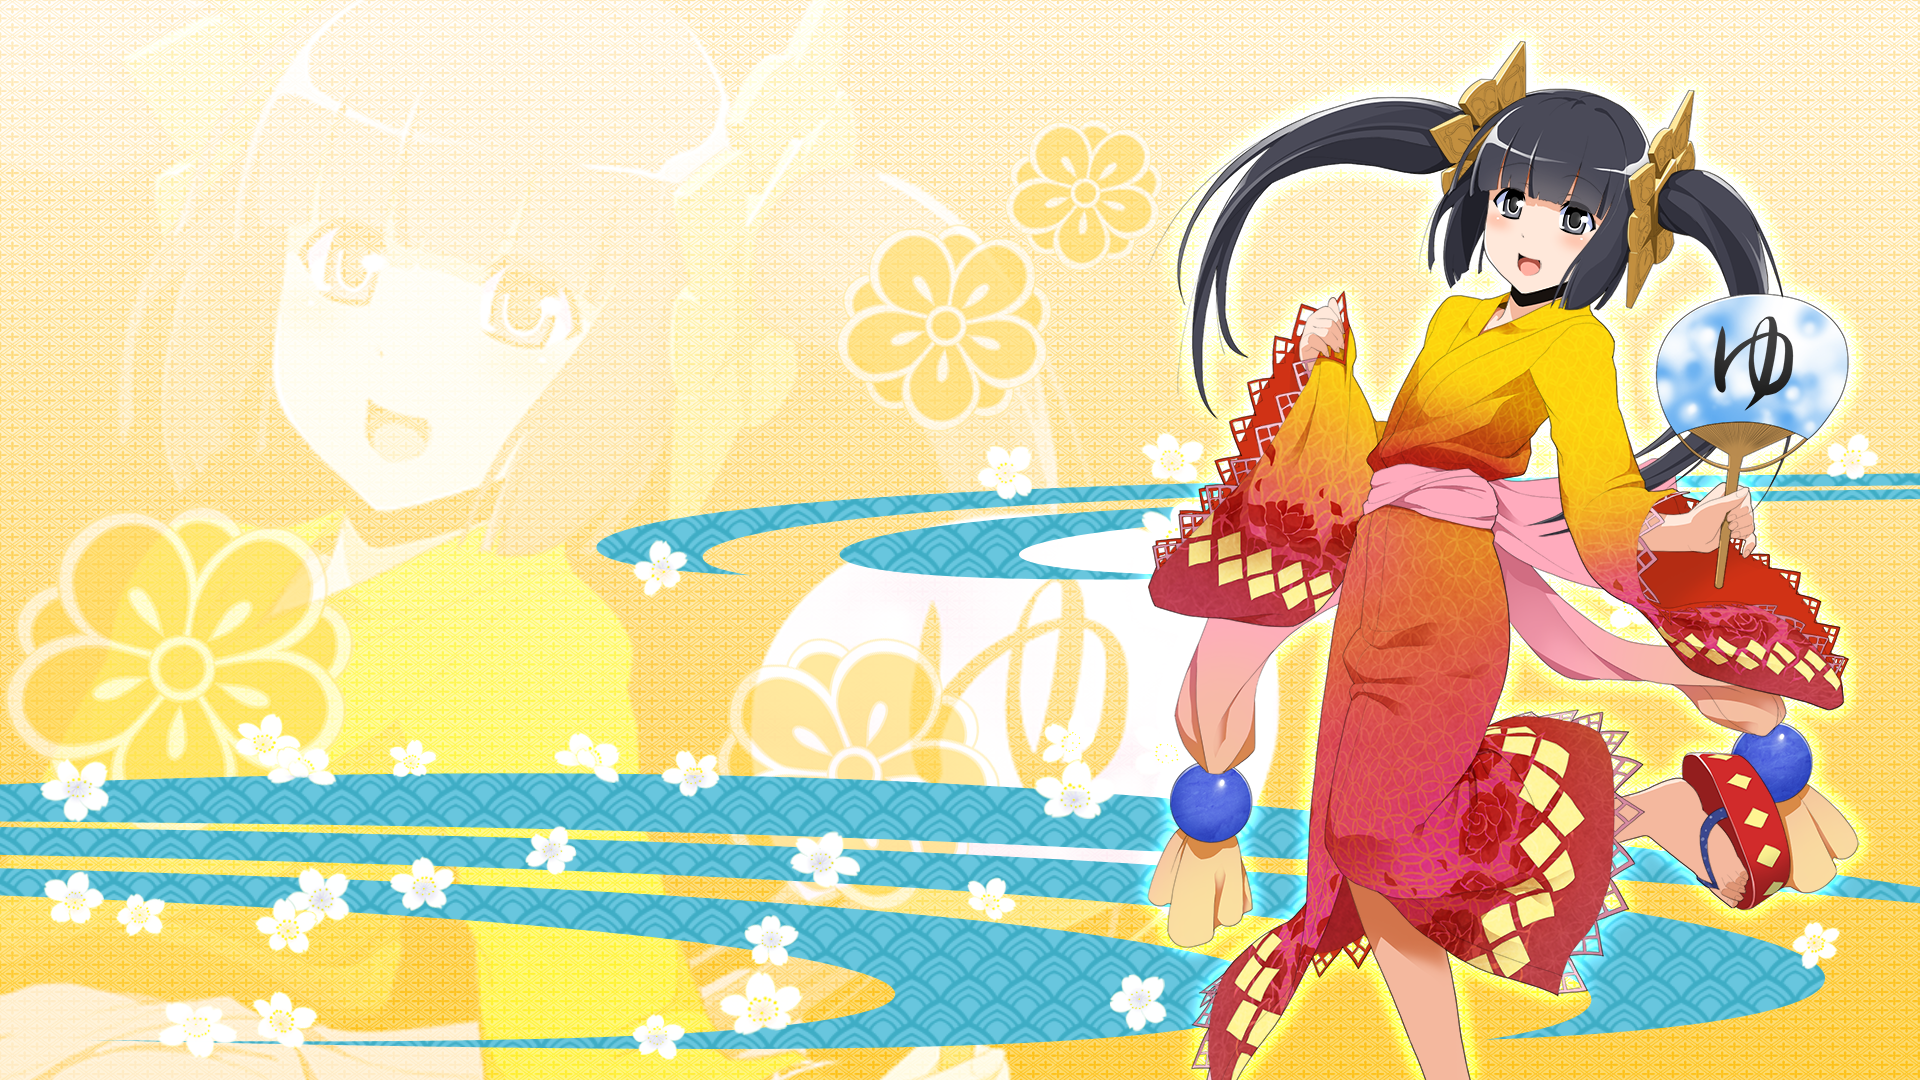 Anime 1920x1080 Onigirl anime anime girls dark hair long hair colorful dress yellow background open mouth